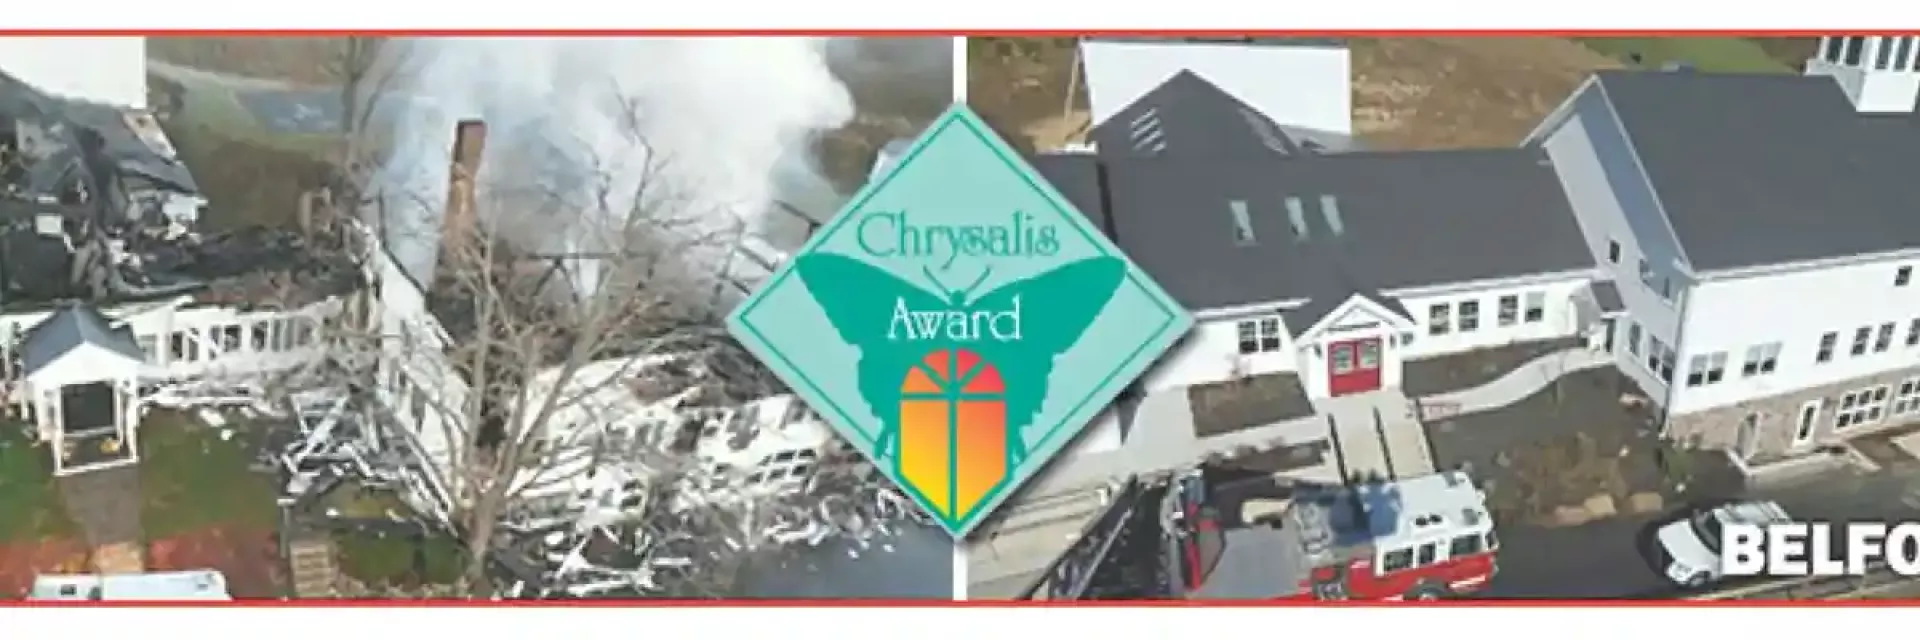 BELFOR Wins Chrysalis Award